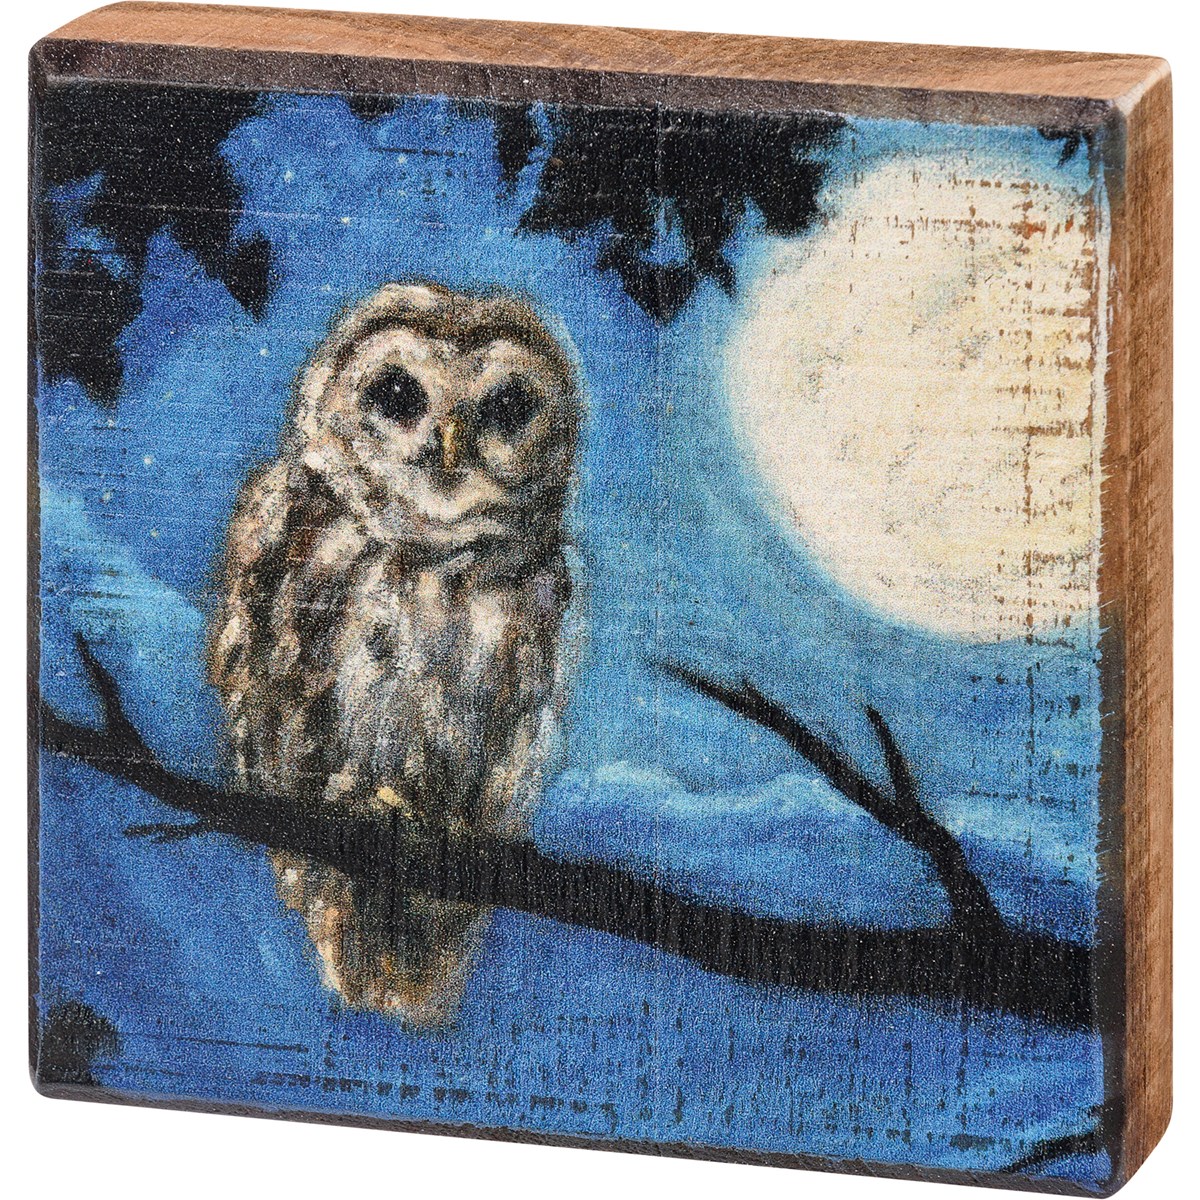 Block Sign - Owl - 4" x 4" x 1" - Wood